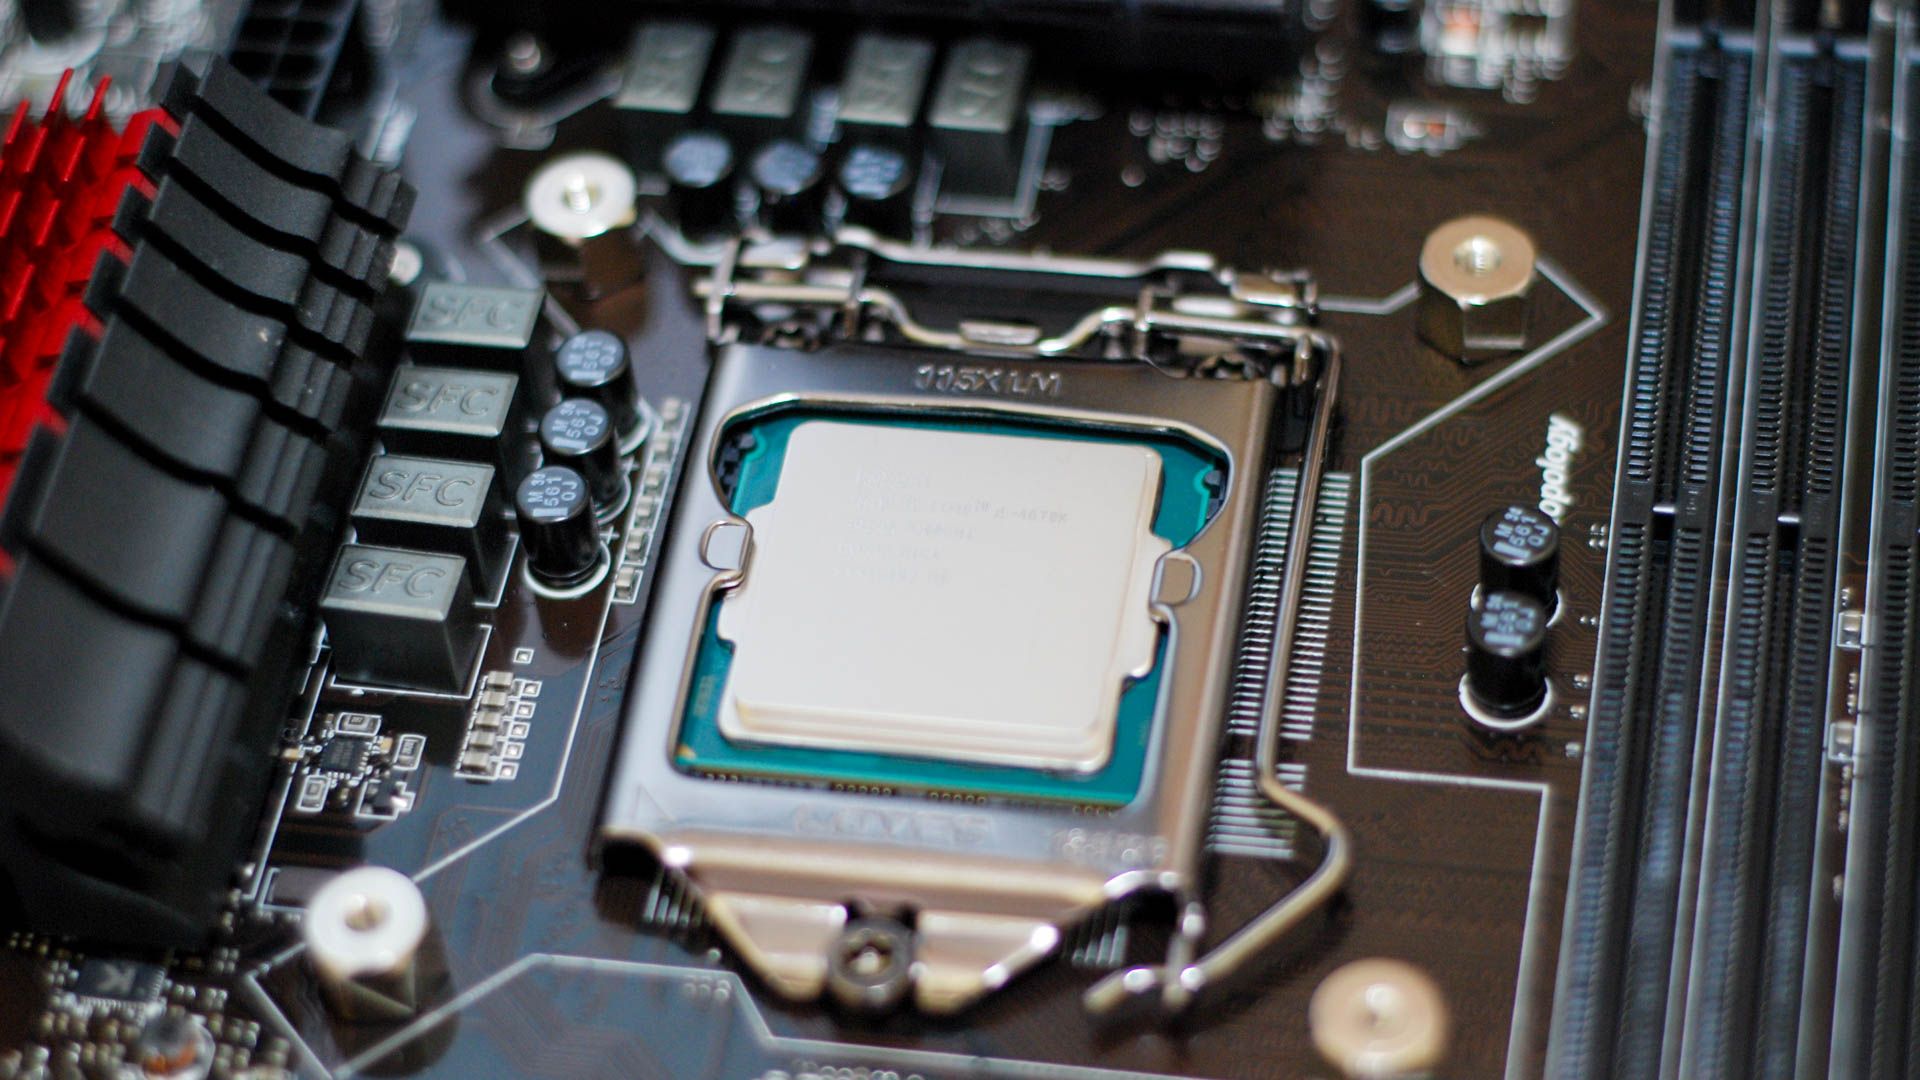 Intel CPU sitting on its socket